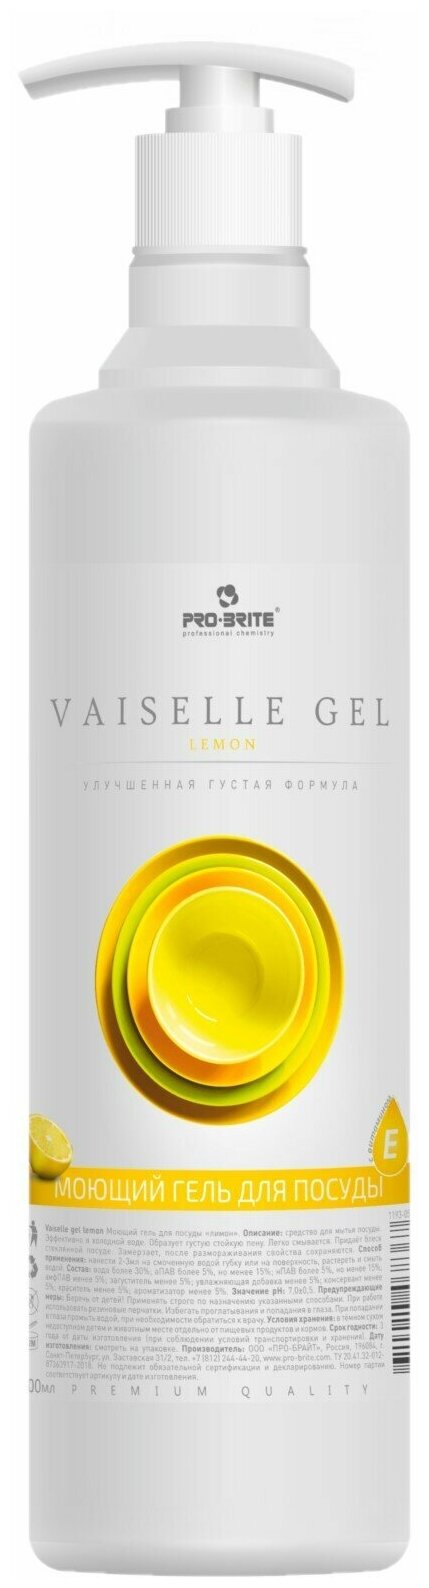 Pro-Brite Vaiselle Gel Lemon Моющий гель для посуды с витамином "Е" 500мл.